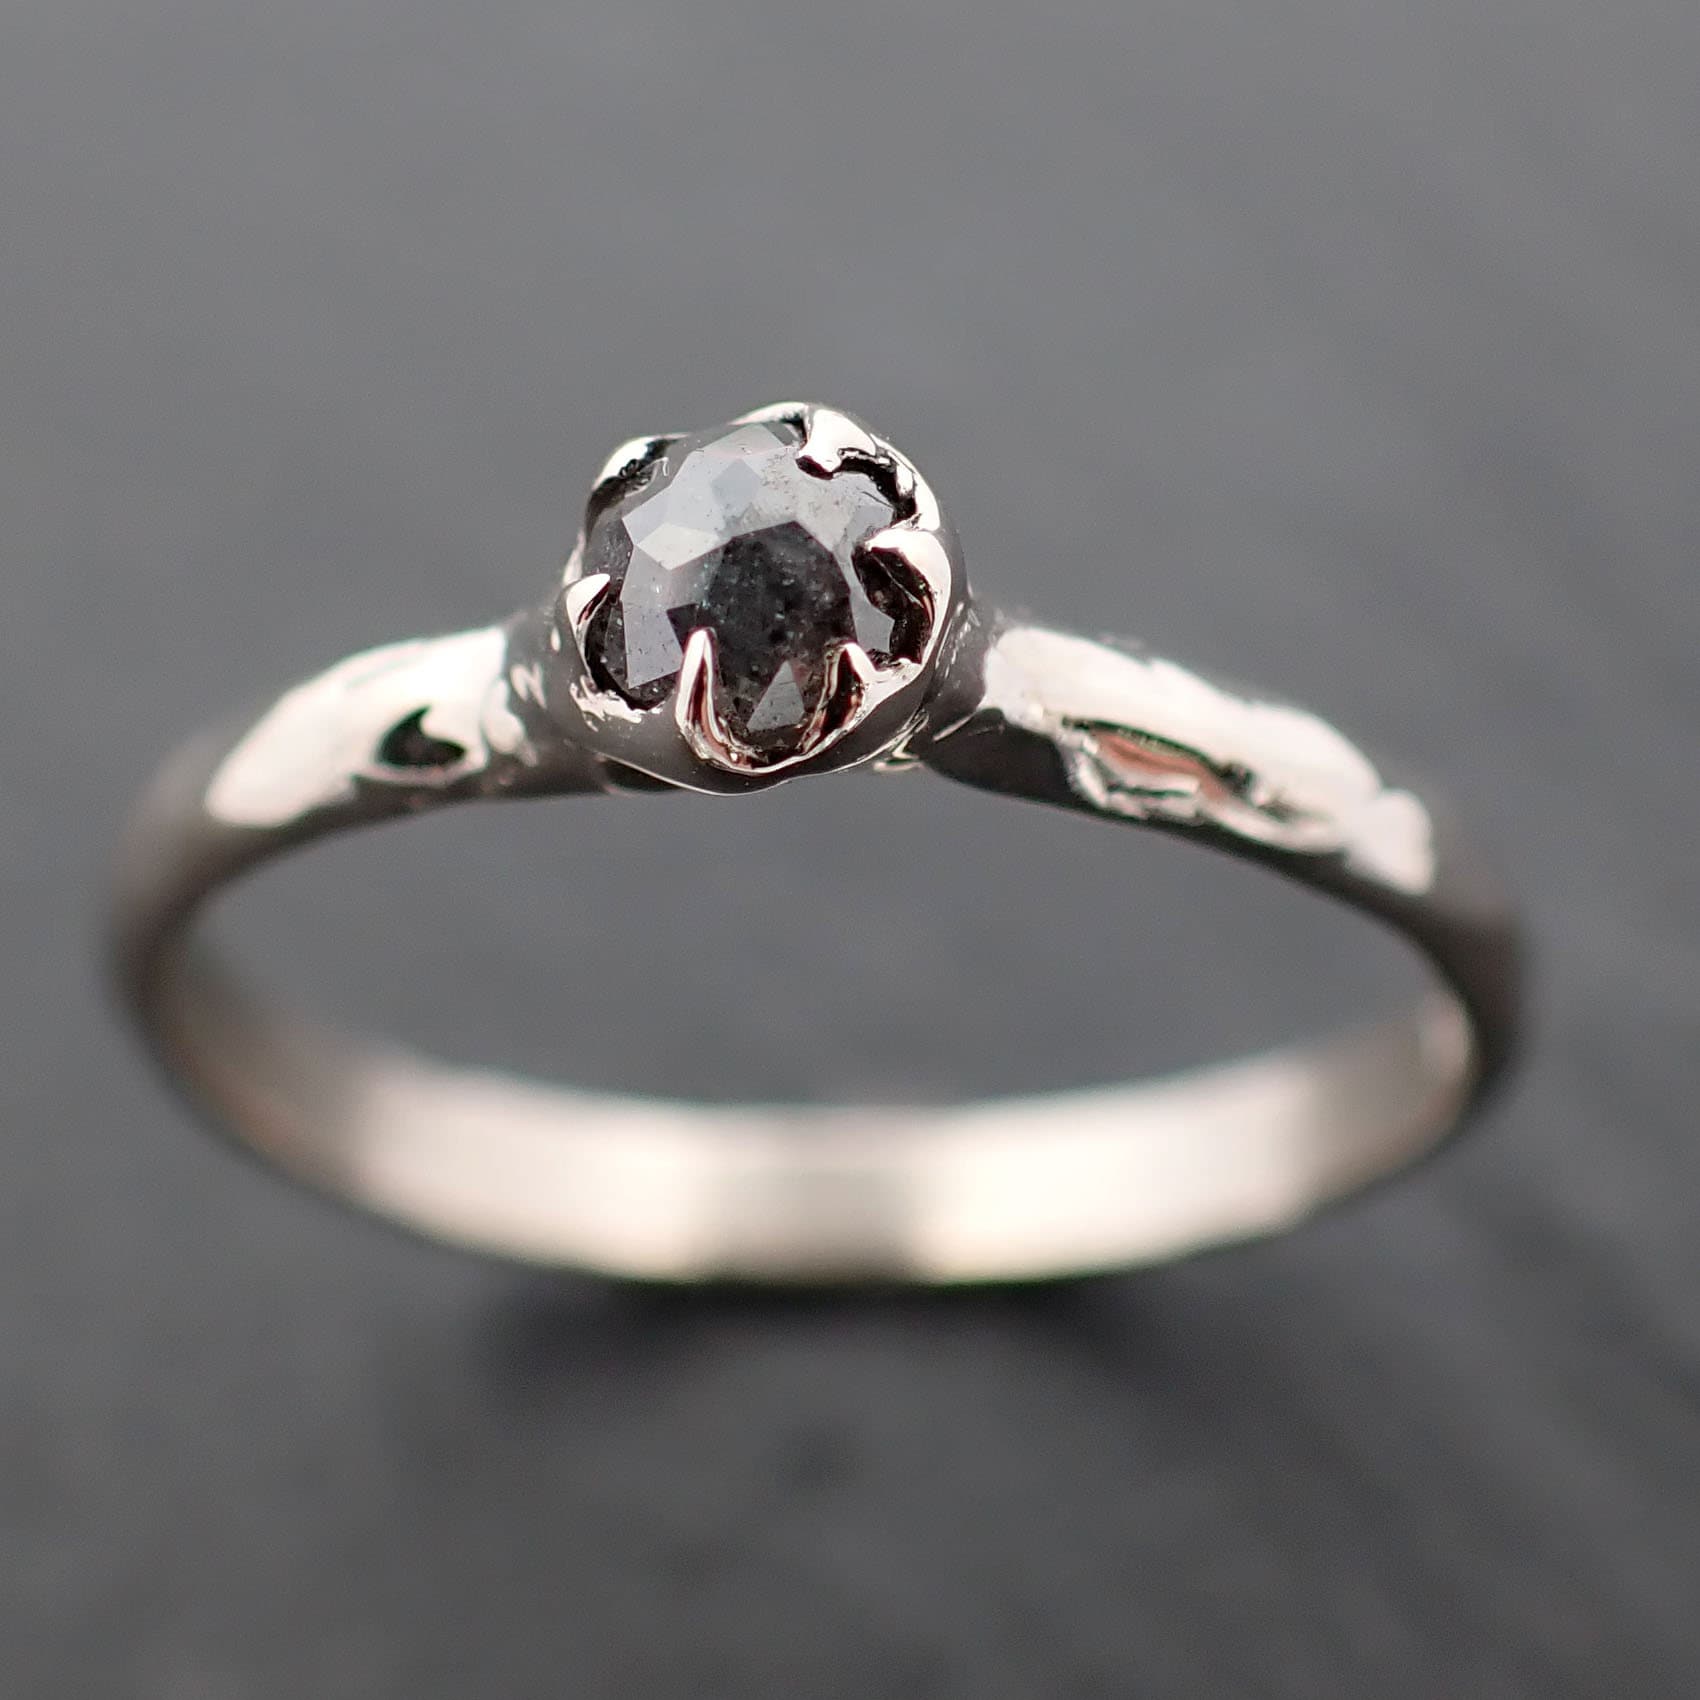 Fancy cut salt and pepper Diamond Solitaire Engagement Ring 14k White Gold Rough Diamond ring byAngeline 3495